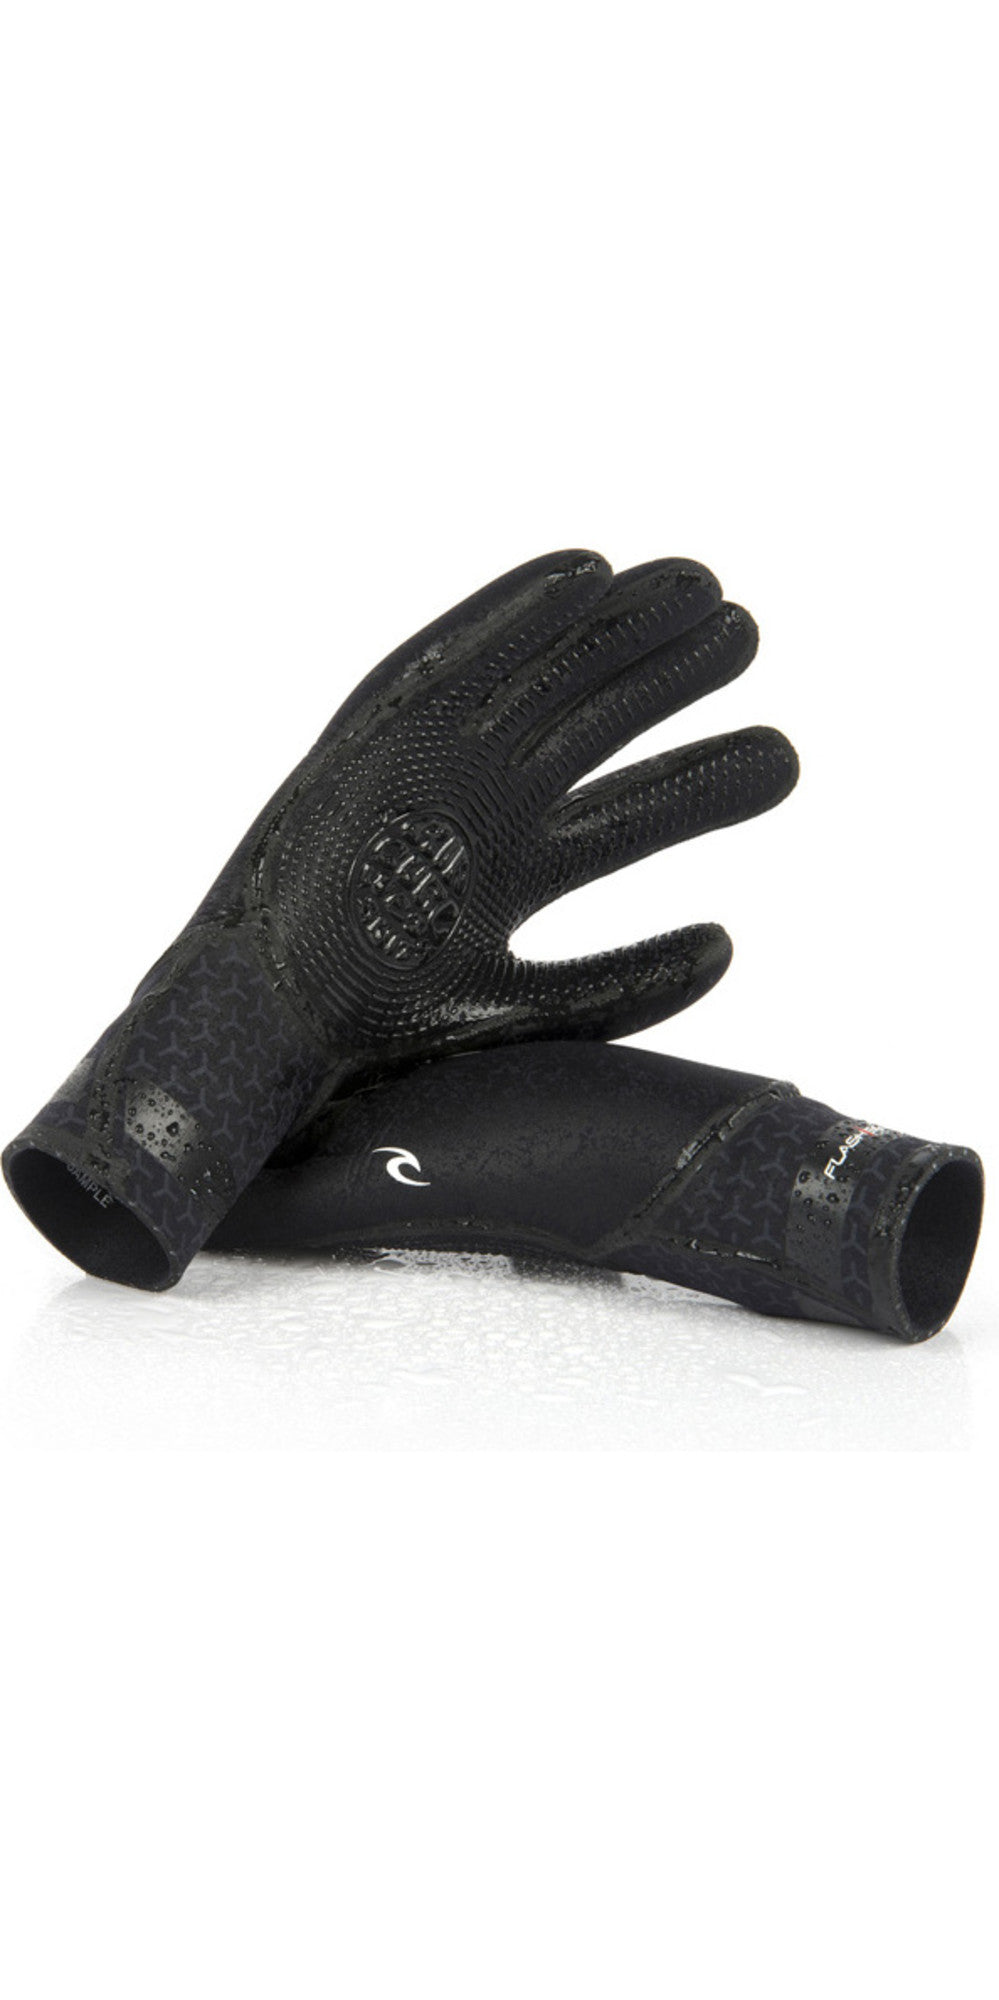 Rip Curl Flashbomb 5/3 5 Finger Gloves - Black-Wetsuit Gloves-troggs.com